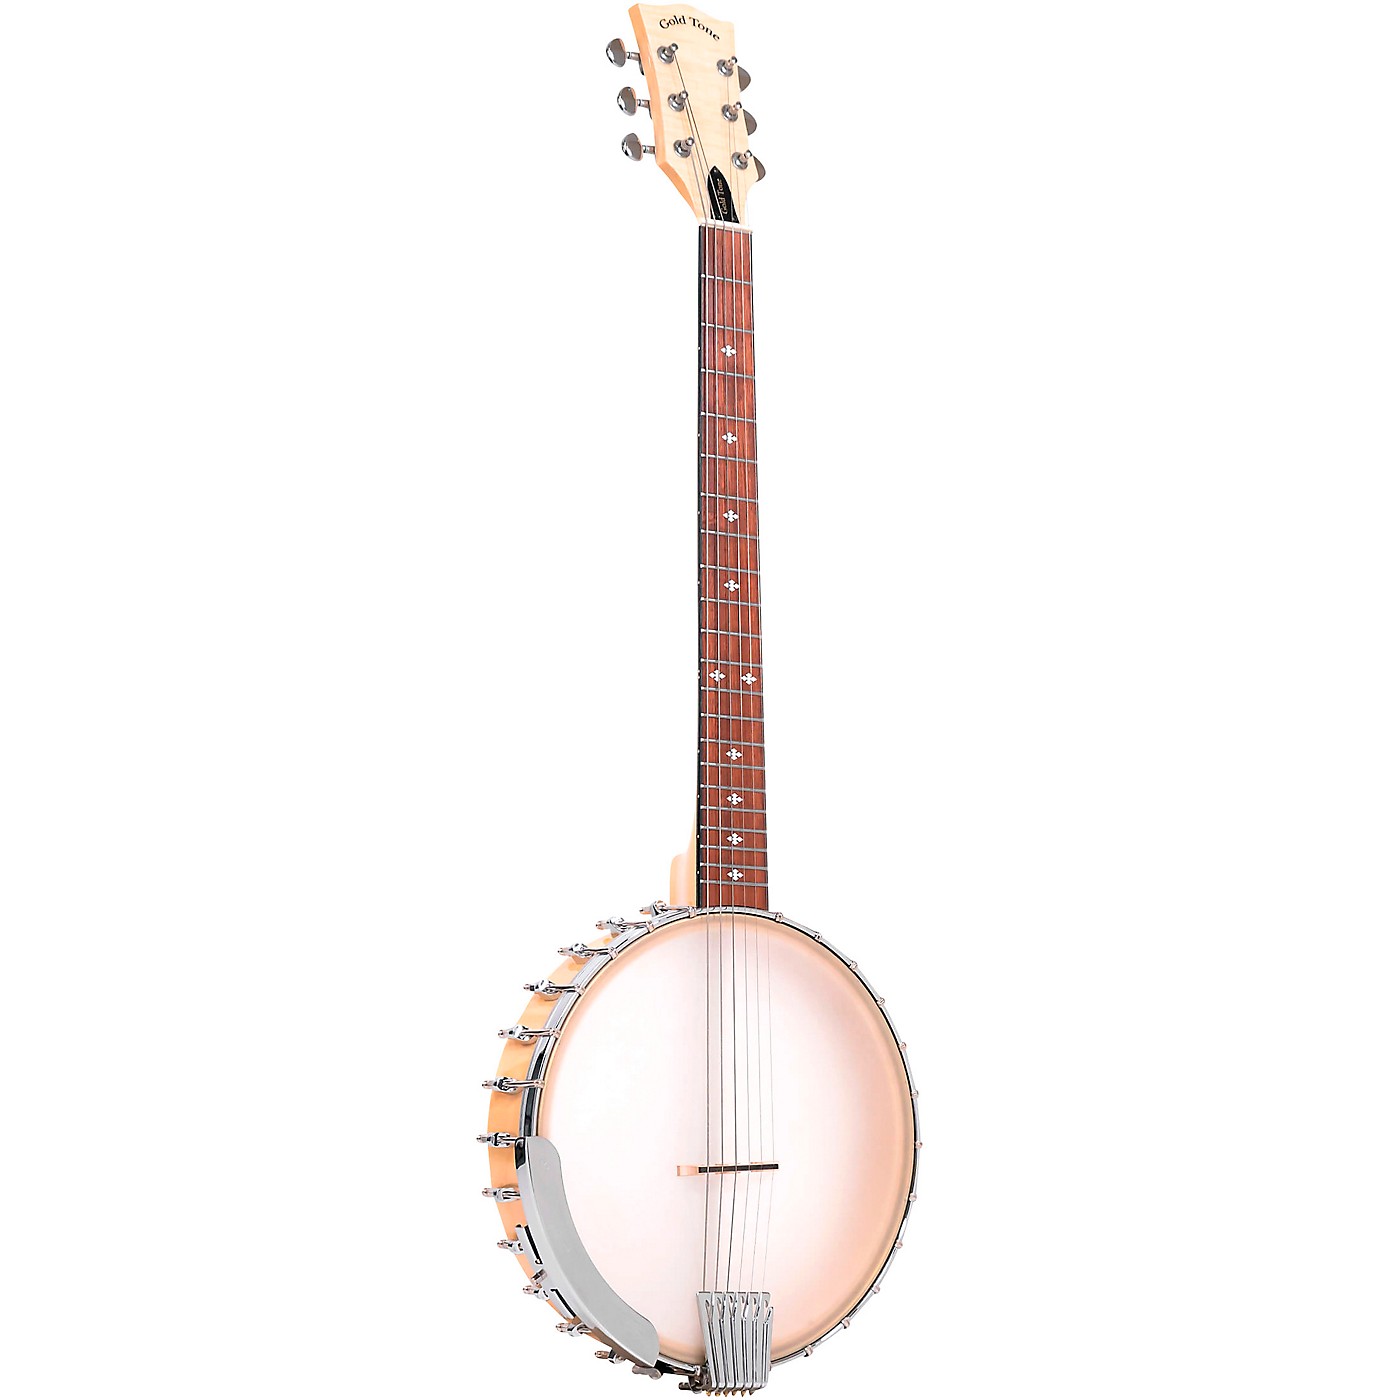 Gold Tone BT-1000 6-String Banjo Guitar thumbnail